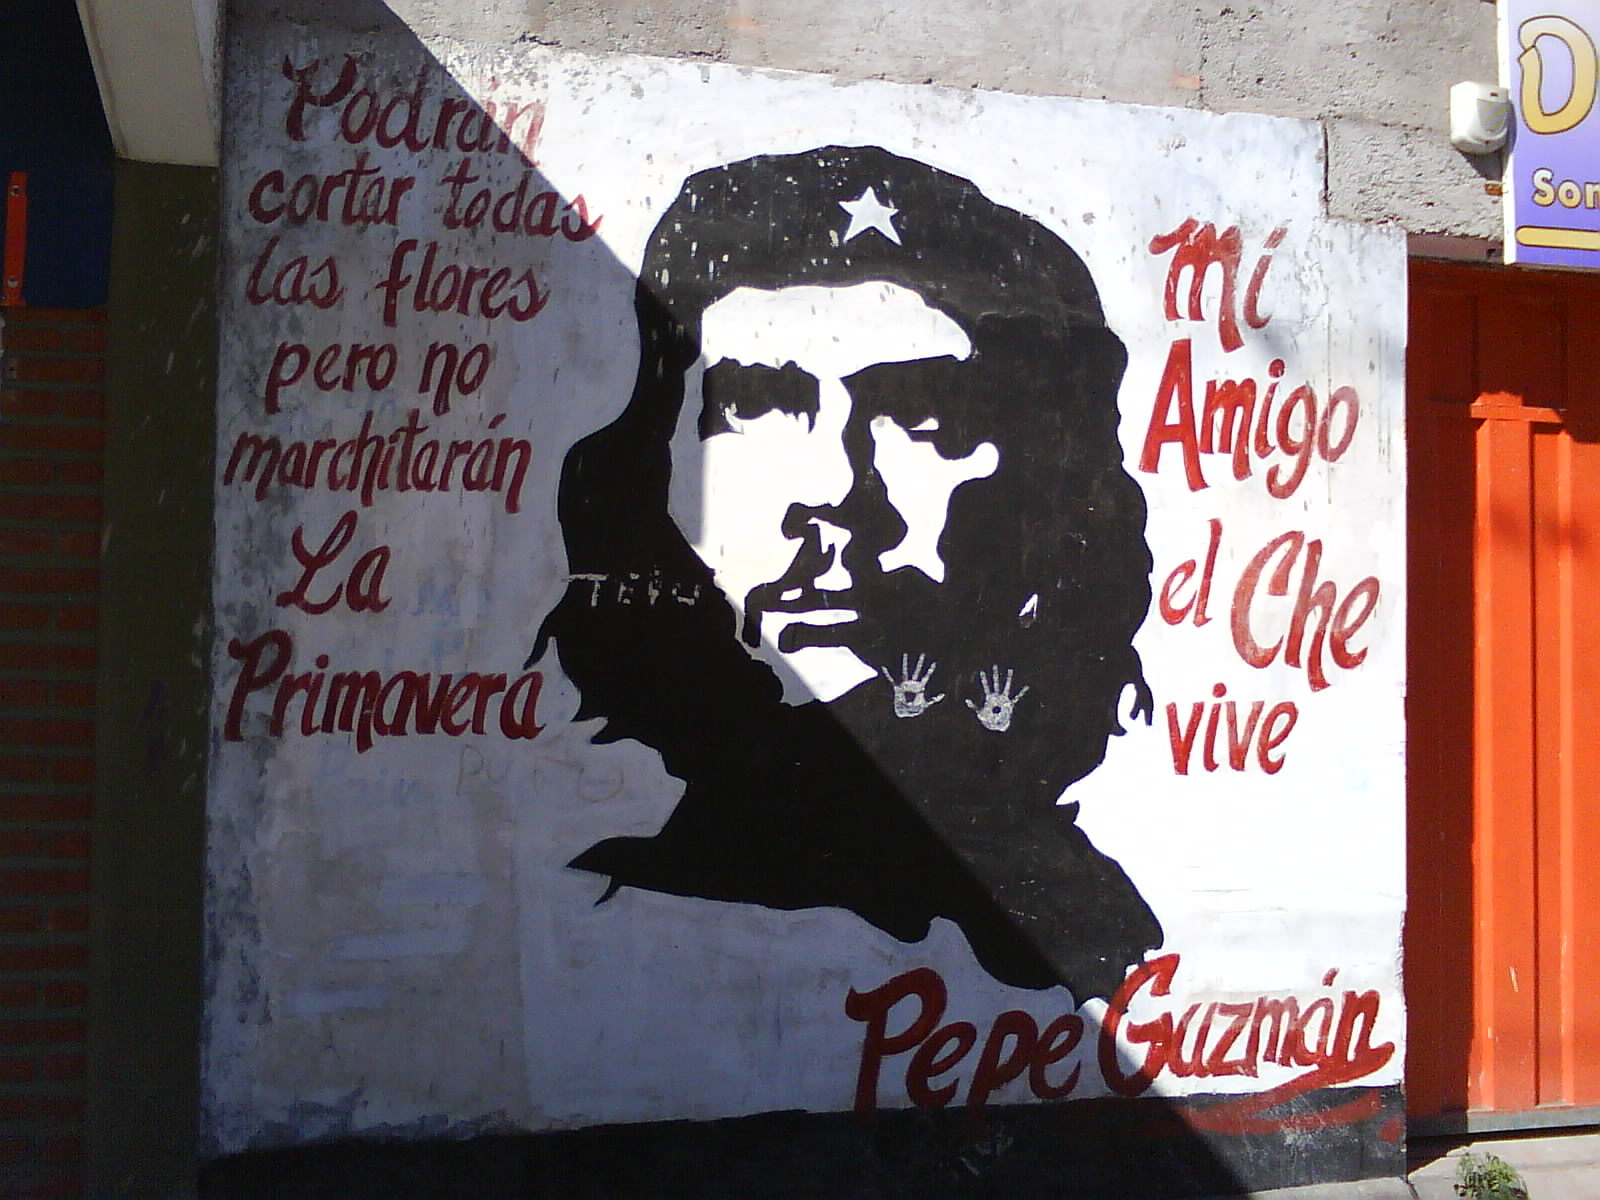 Me amigo Che on every wall